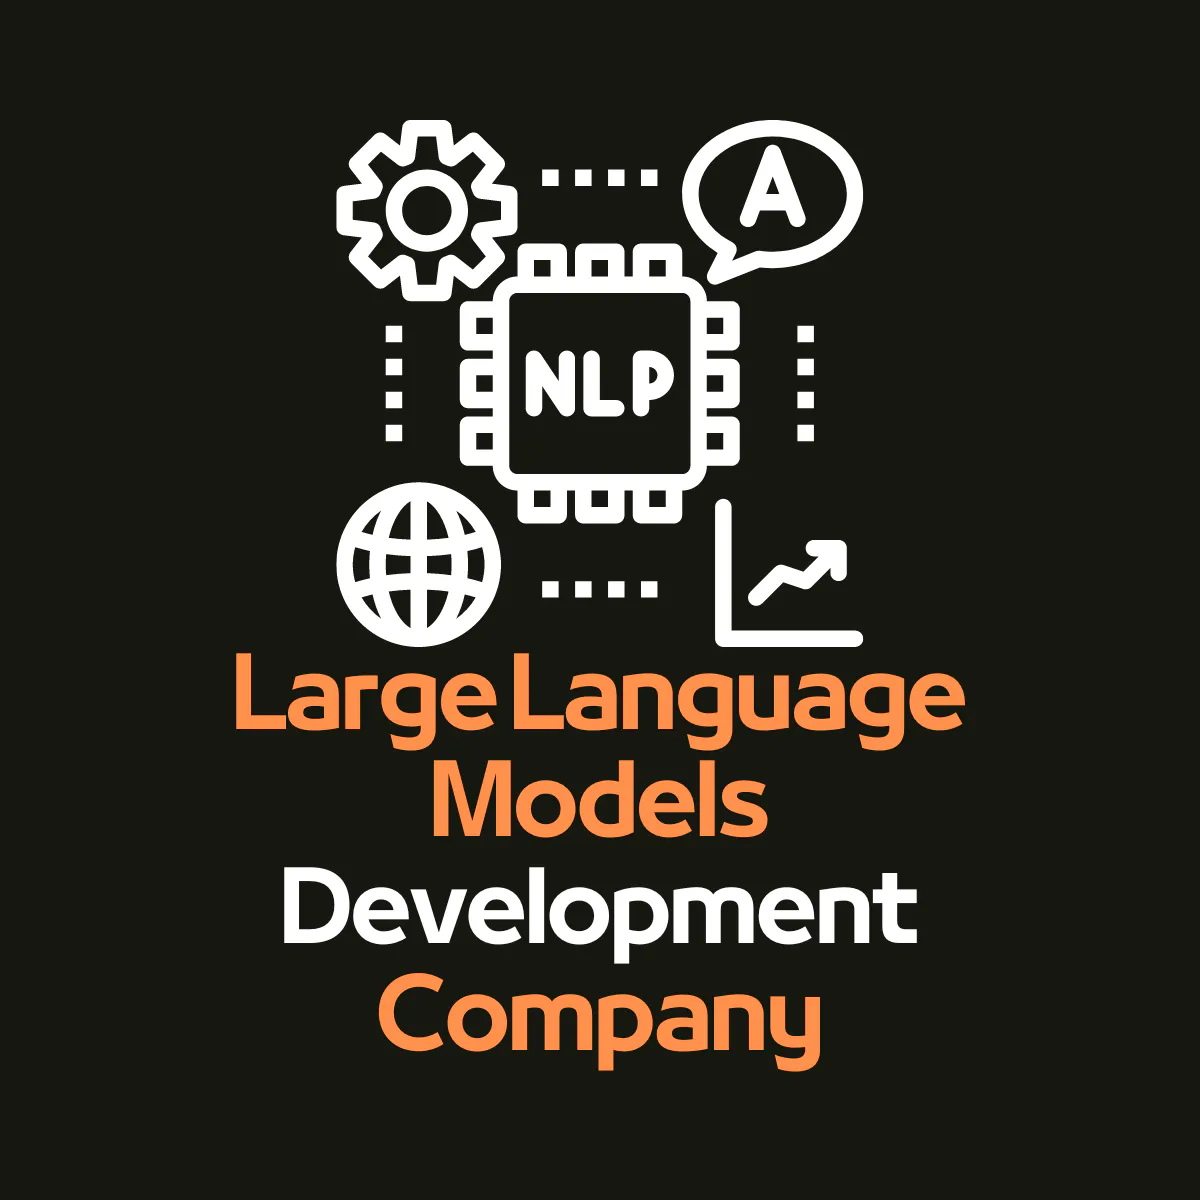 Large Language Models Development